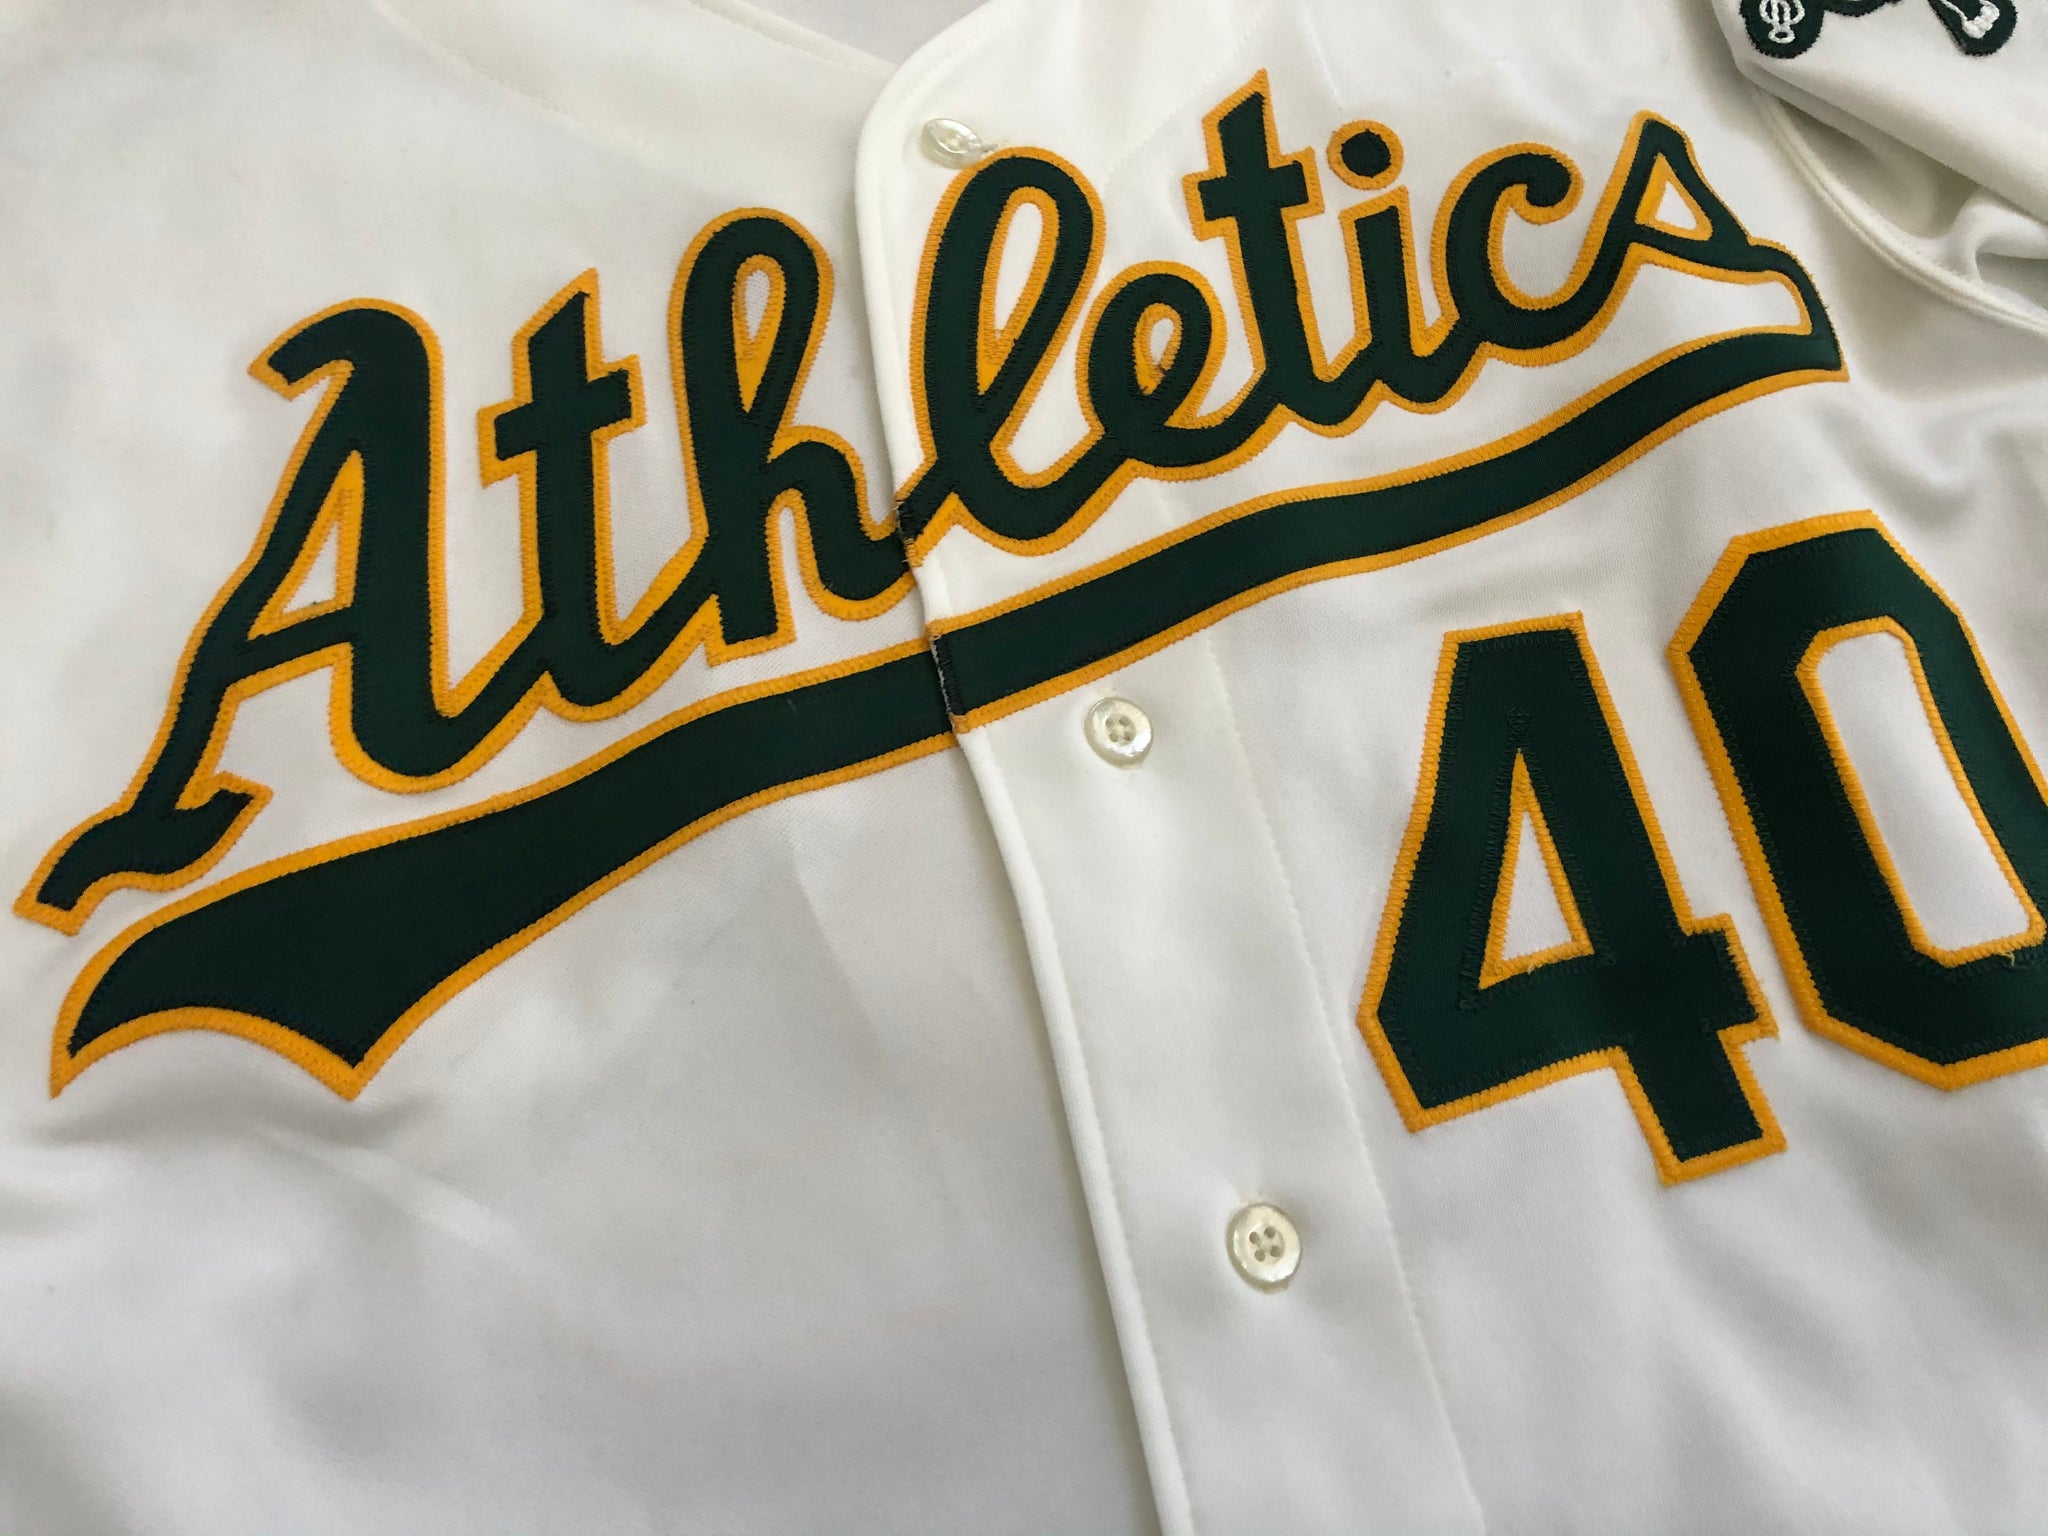 Oakland Athletics Unisex Adult MLB Jerseys for sale